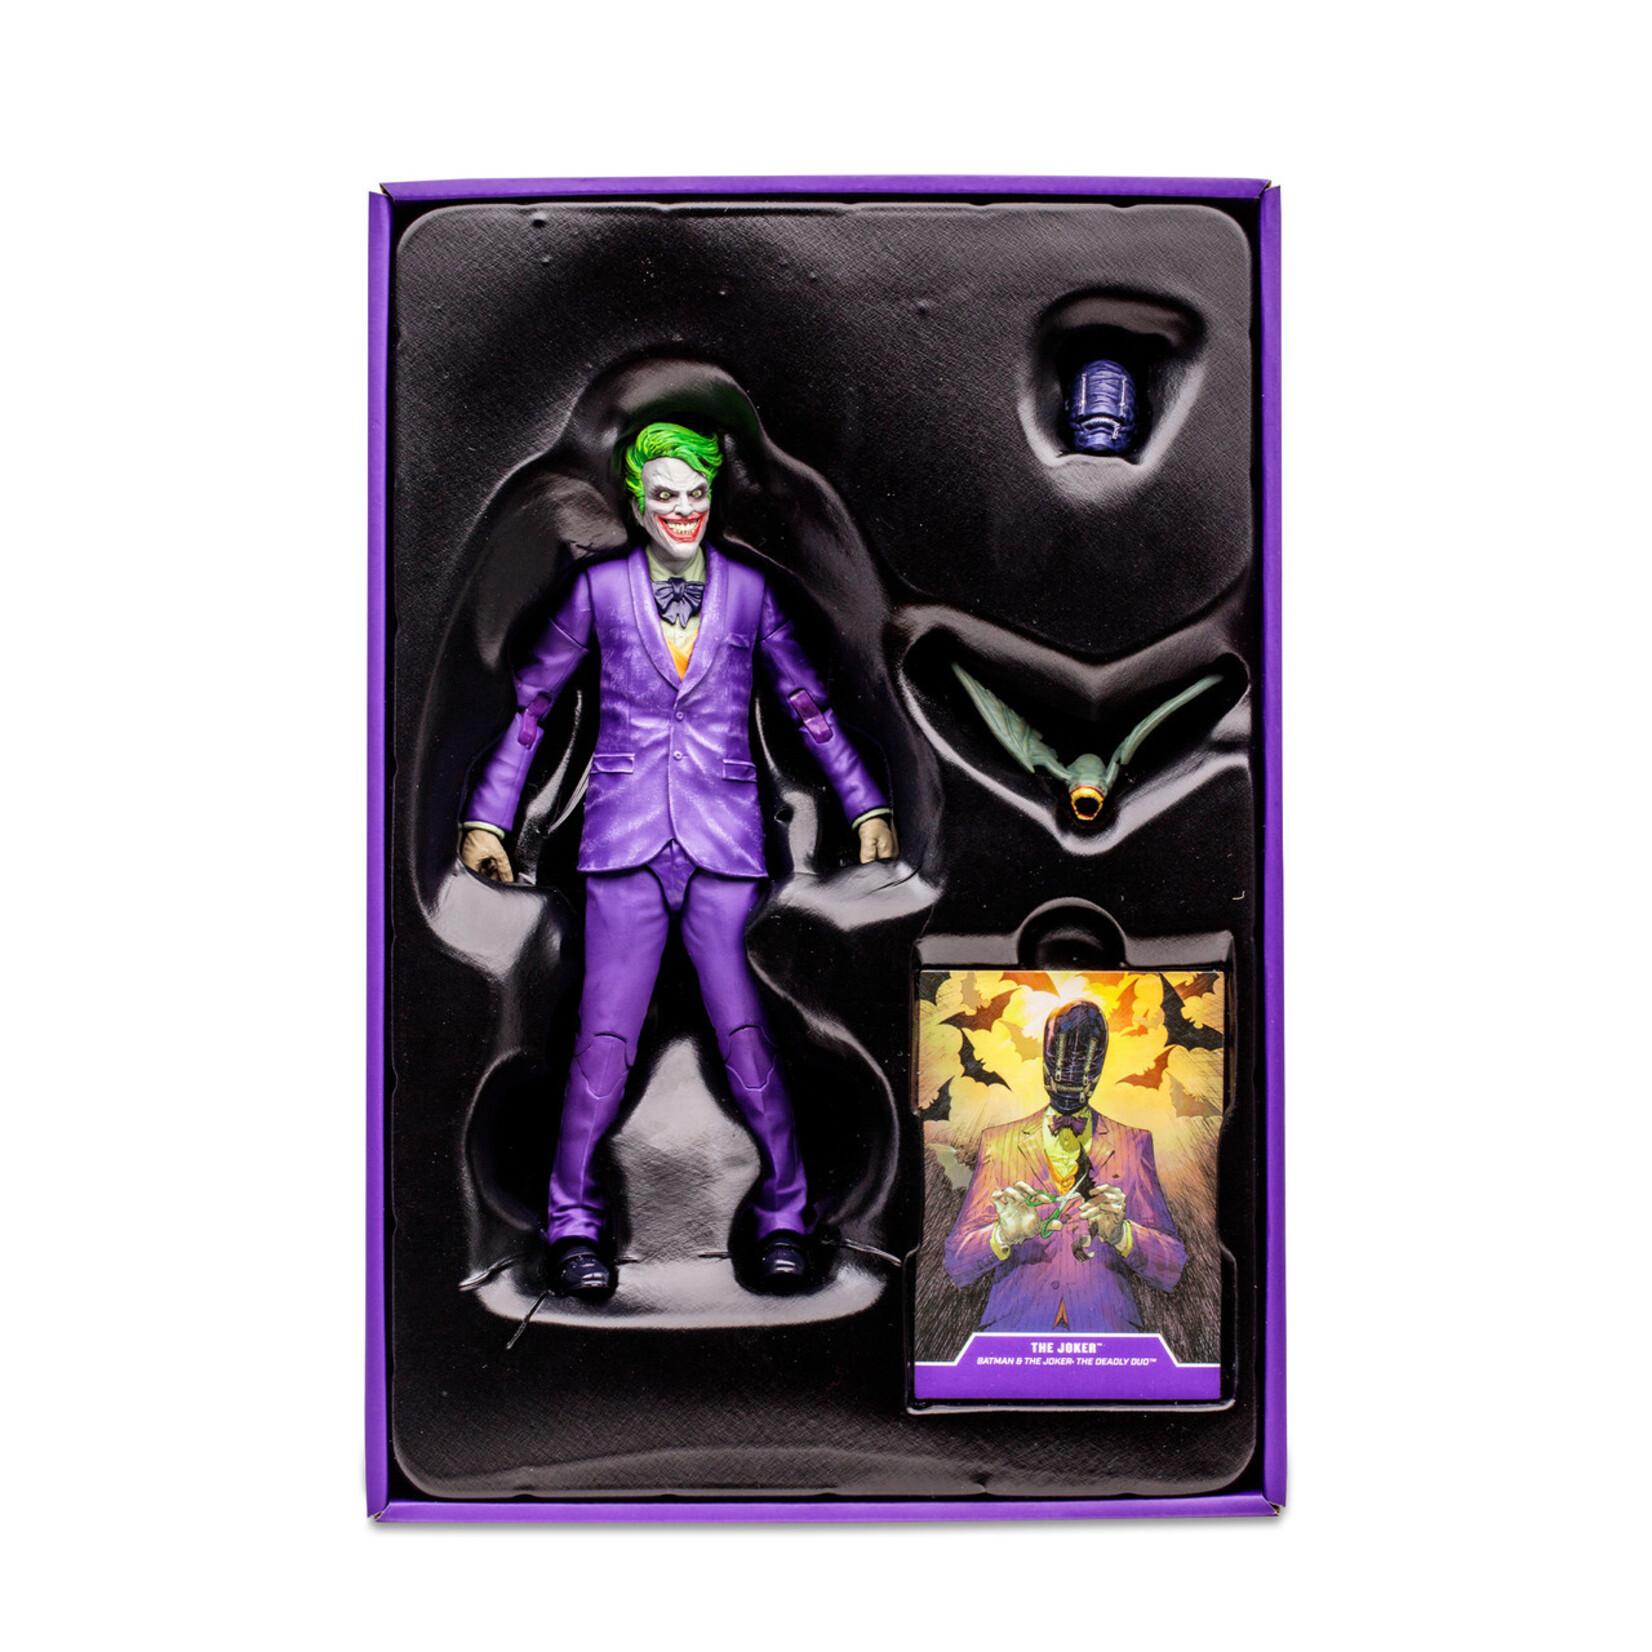 McFarlane Toys McFarlane Toys DC Comics The Joker The Deadly Duo Gold Label Action Figure 18 cm